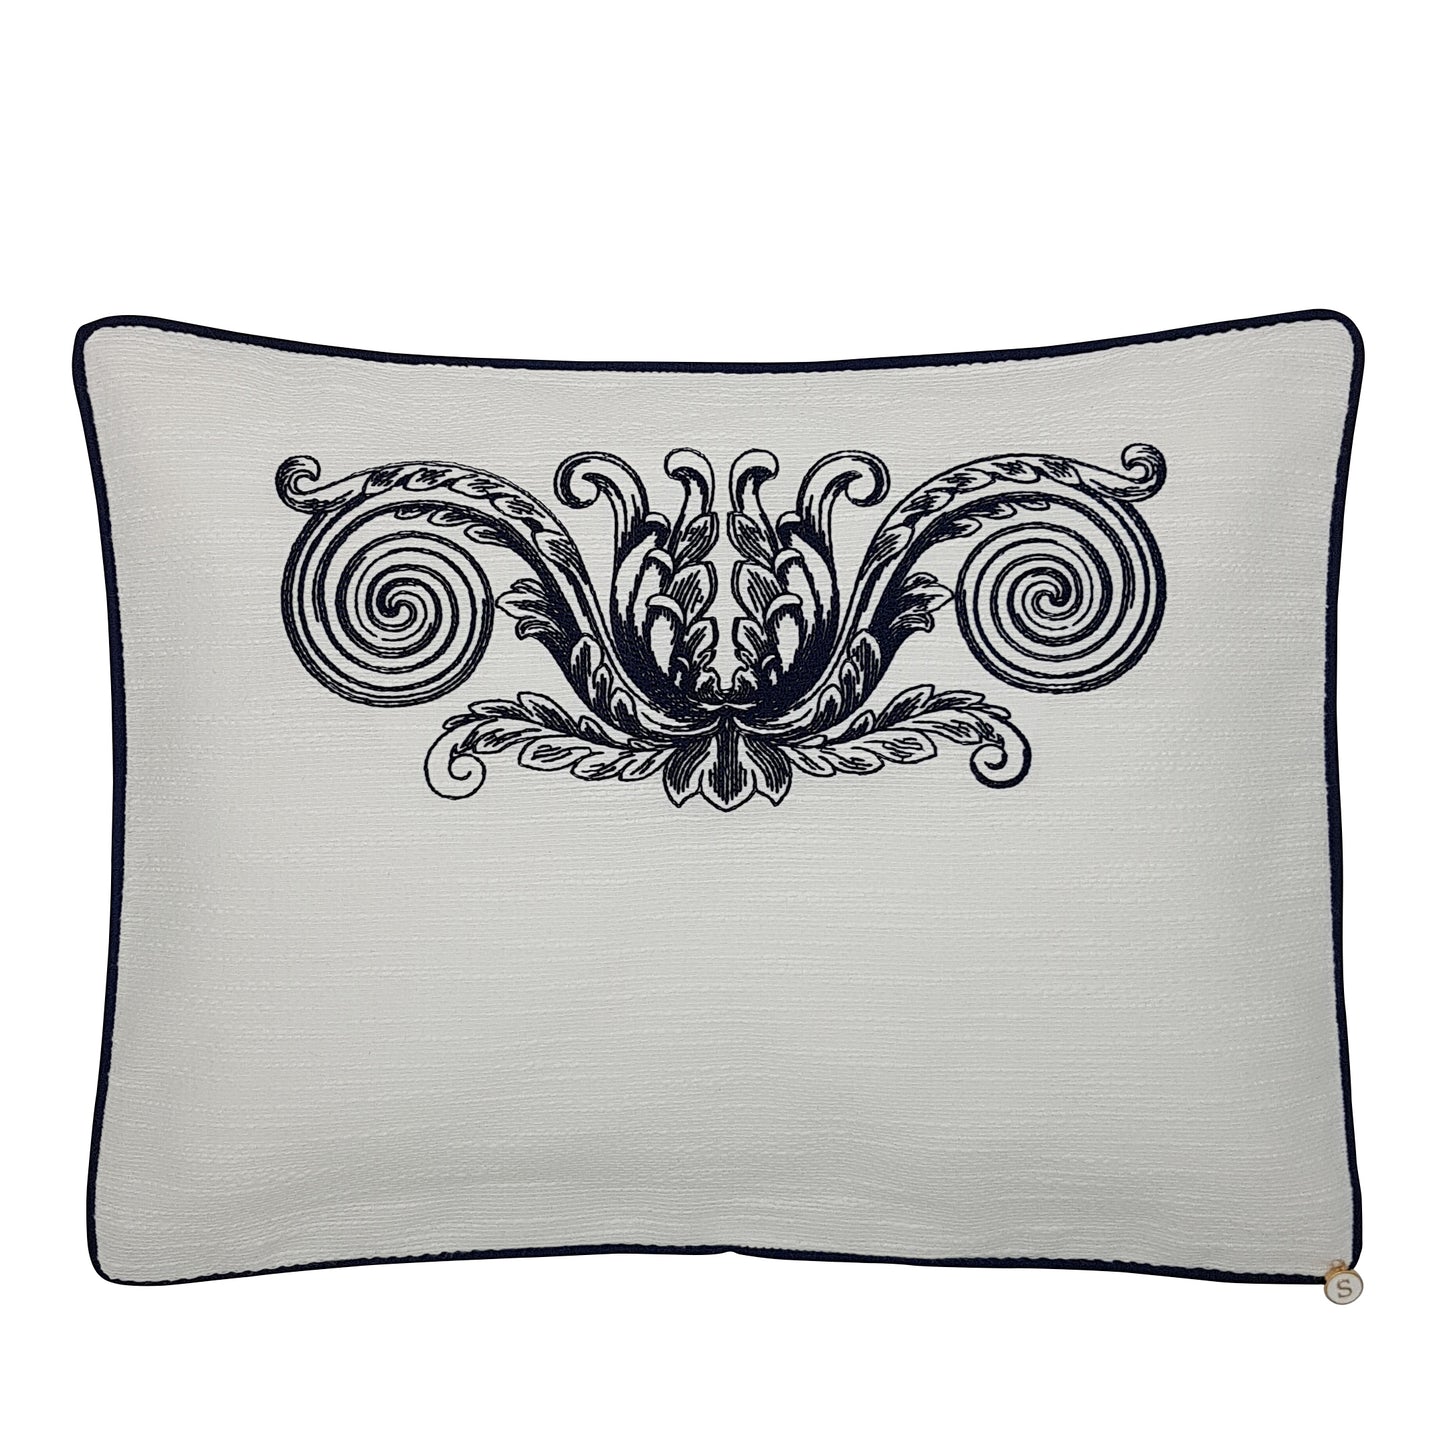 'Elegante in Navy' Embroidered Pillowcase, Navy on white